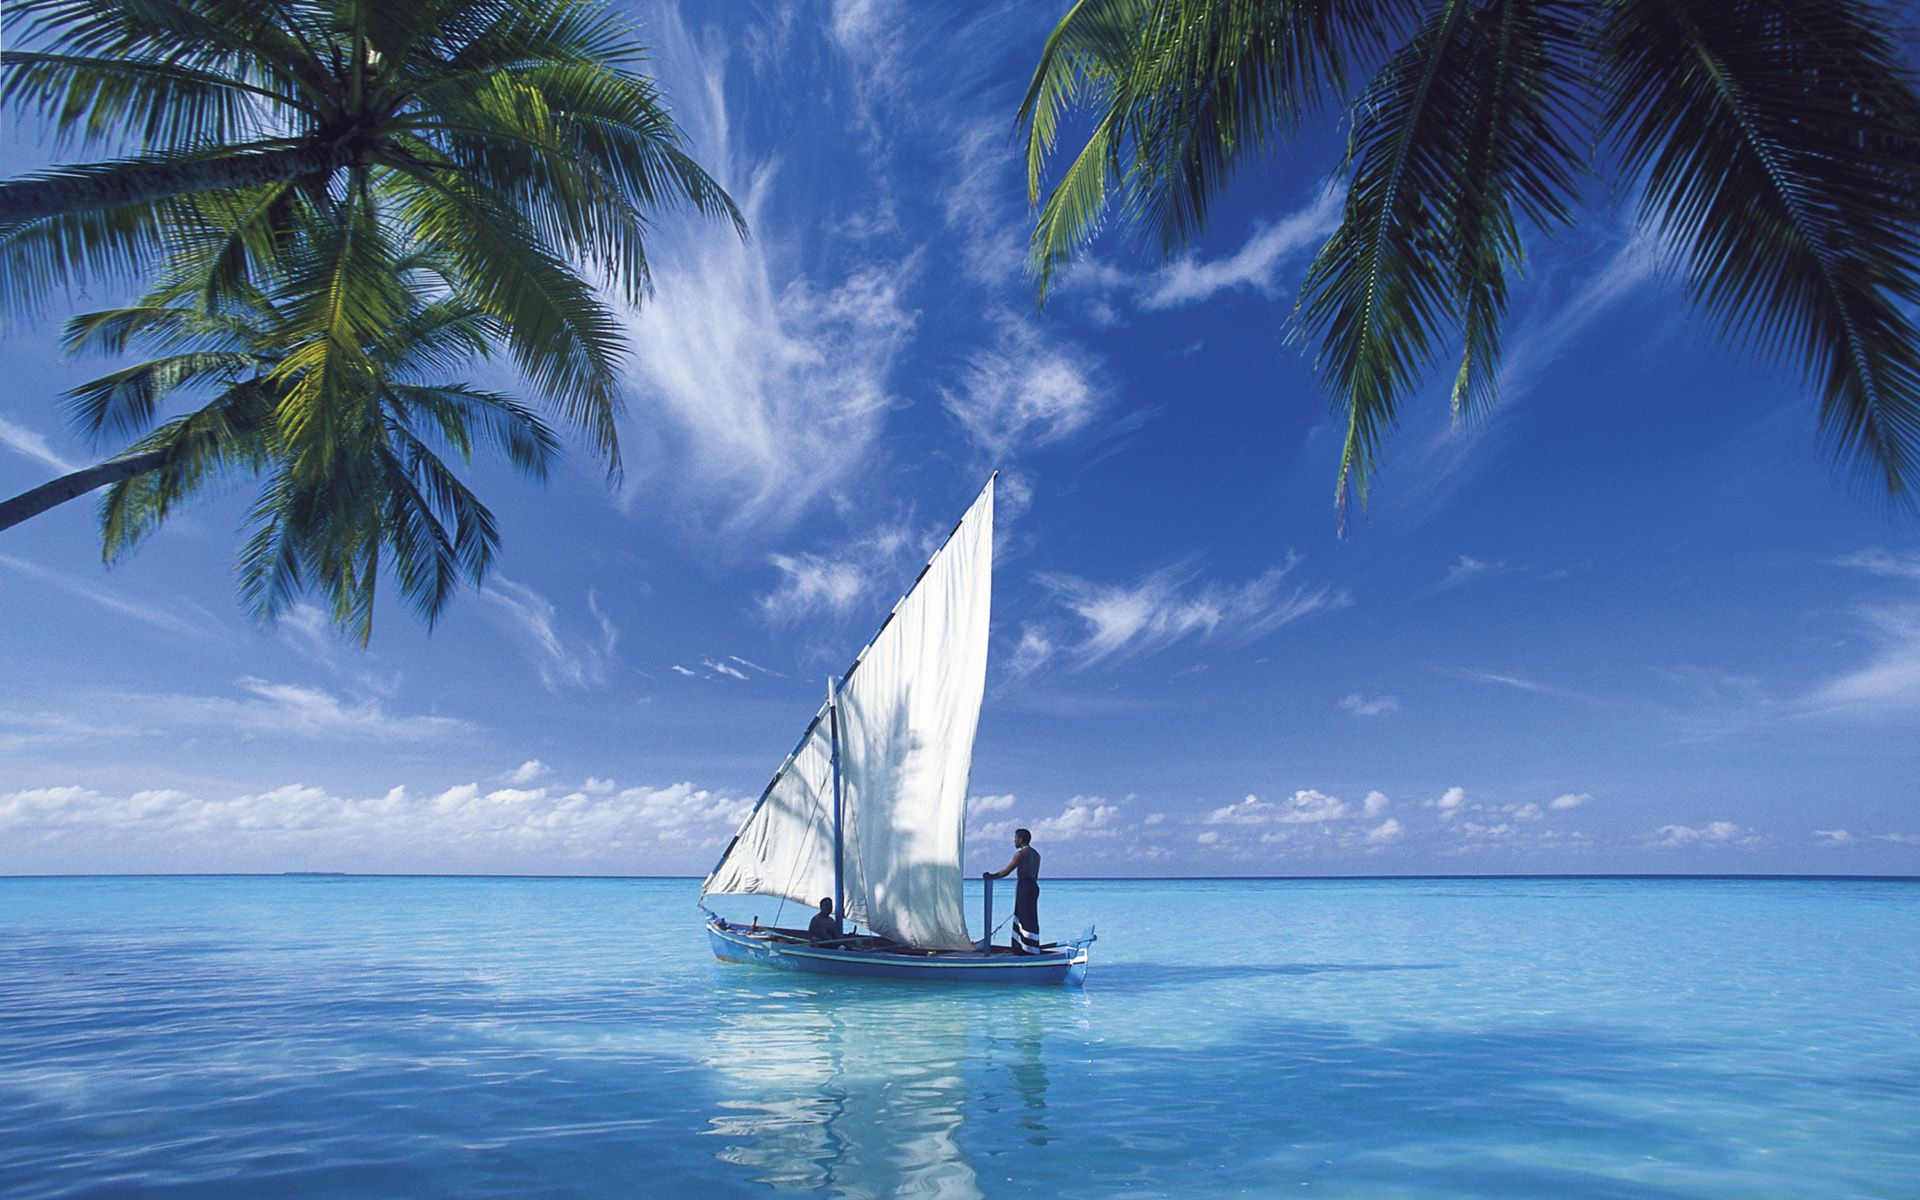 Yacht-Sail-Ocean-on-your-desktop